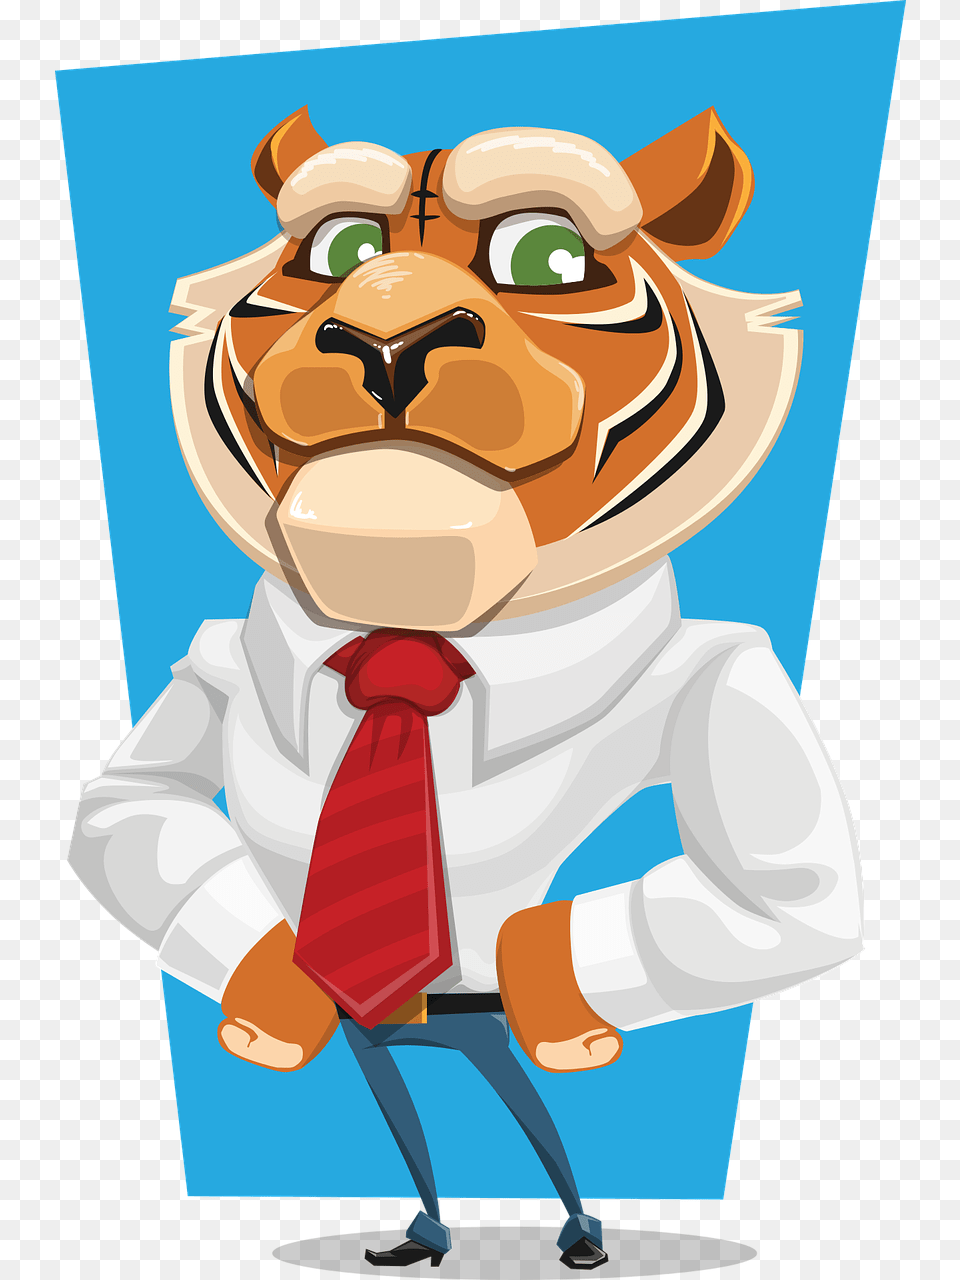 Transparent Tiger Cartoon Tiger In A Suit Cartoon, Accessories, Formal Wear, Tie, Necktie Free Png Download